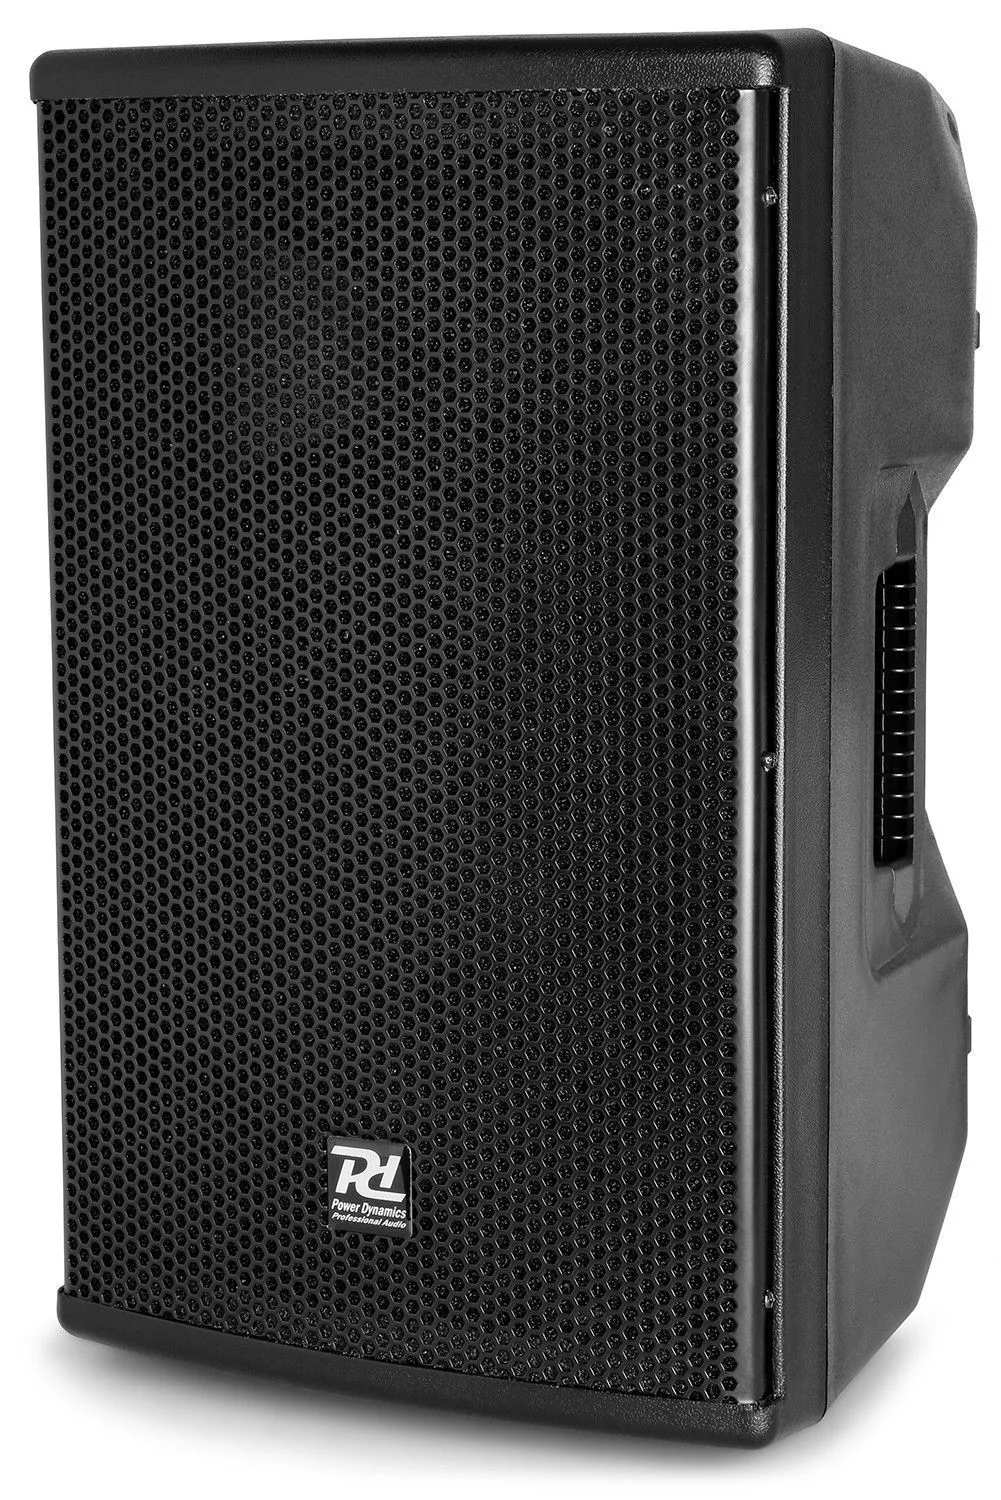 Retourdeal power dynamics pd410a actieve bi amp 10 speaker 800w met 5